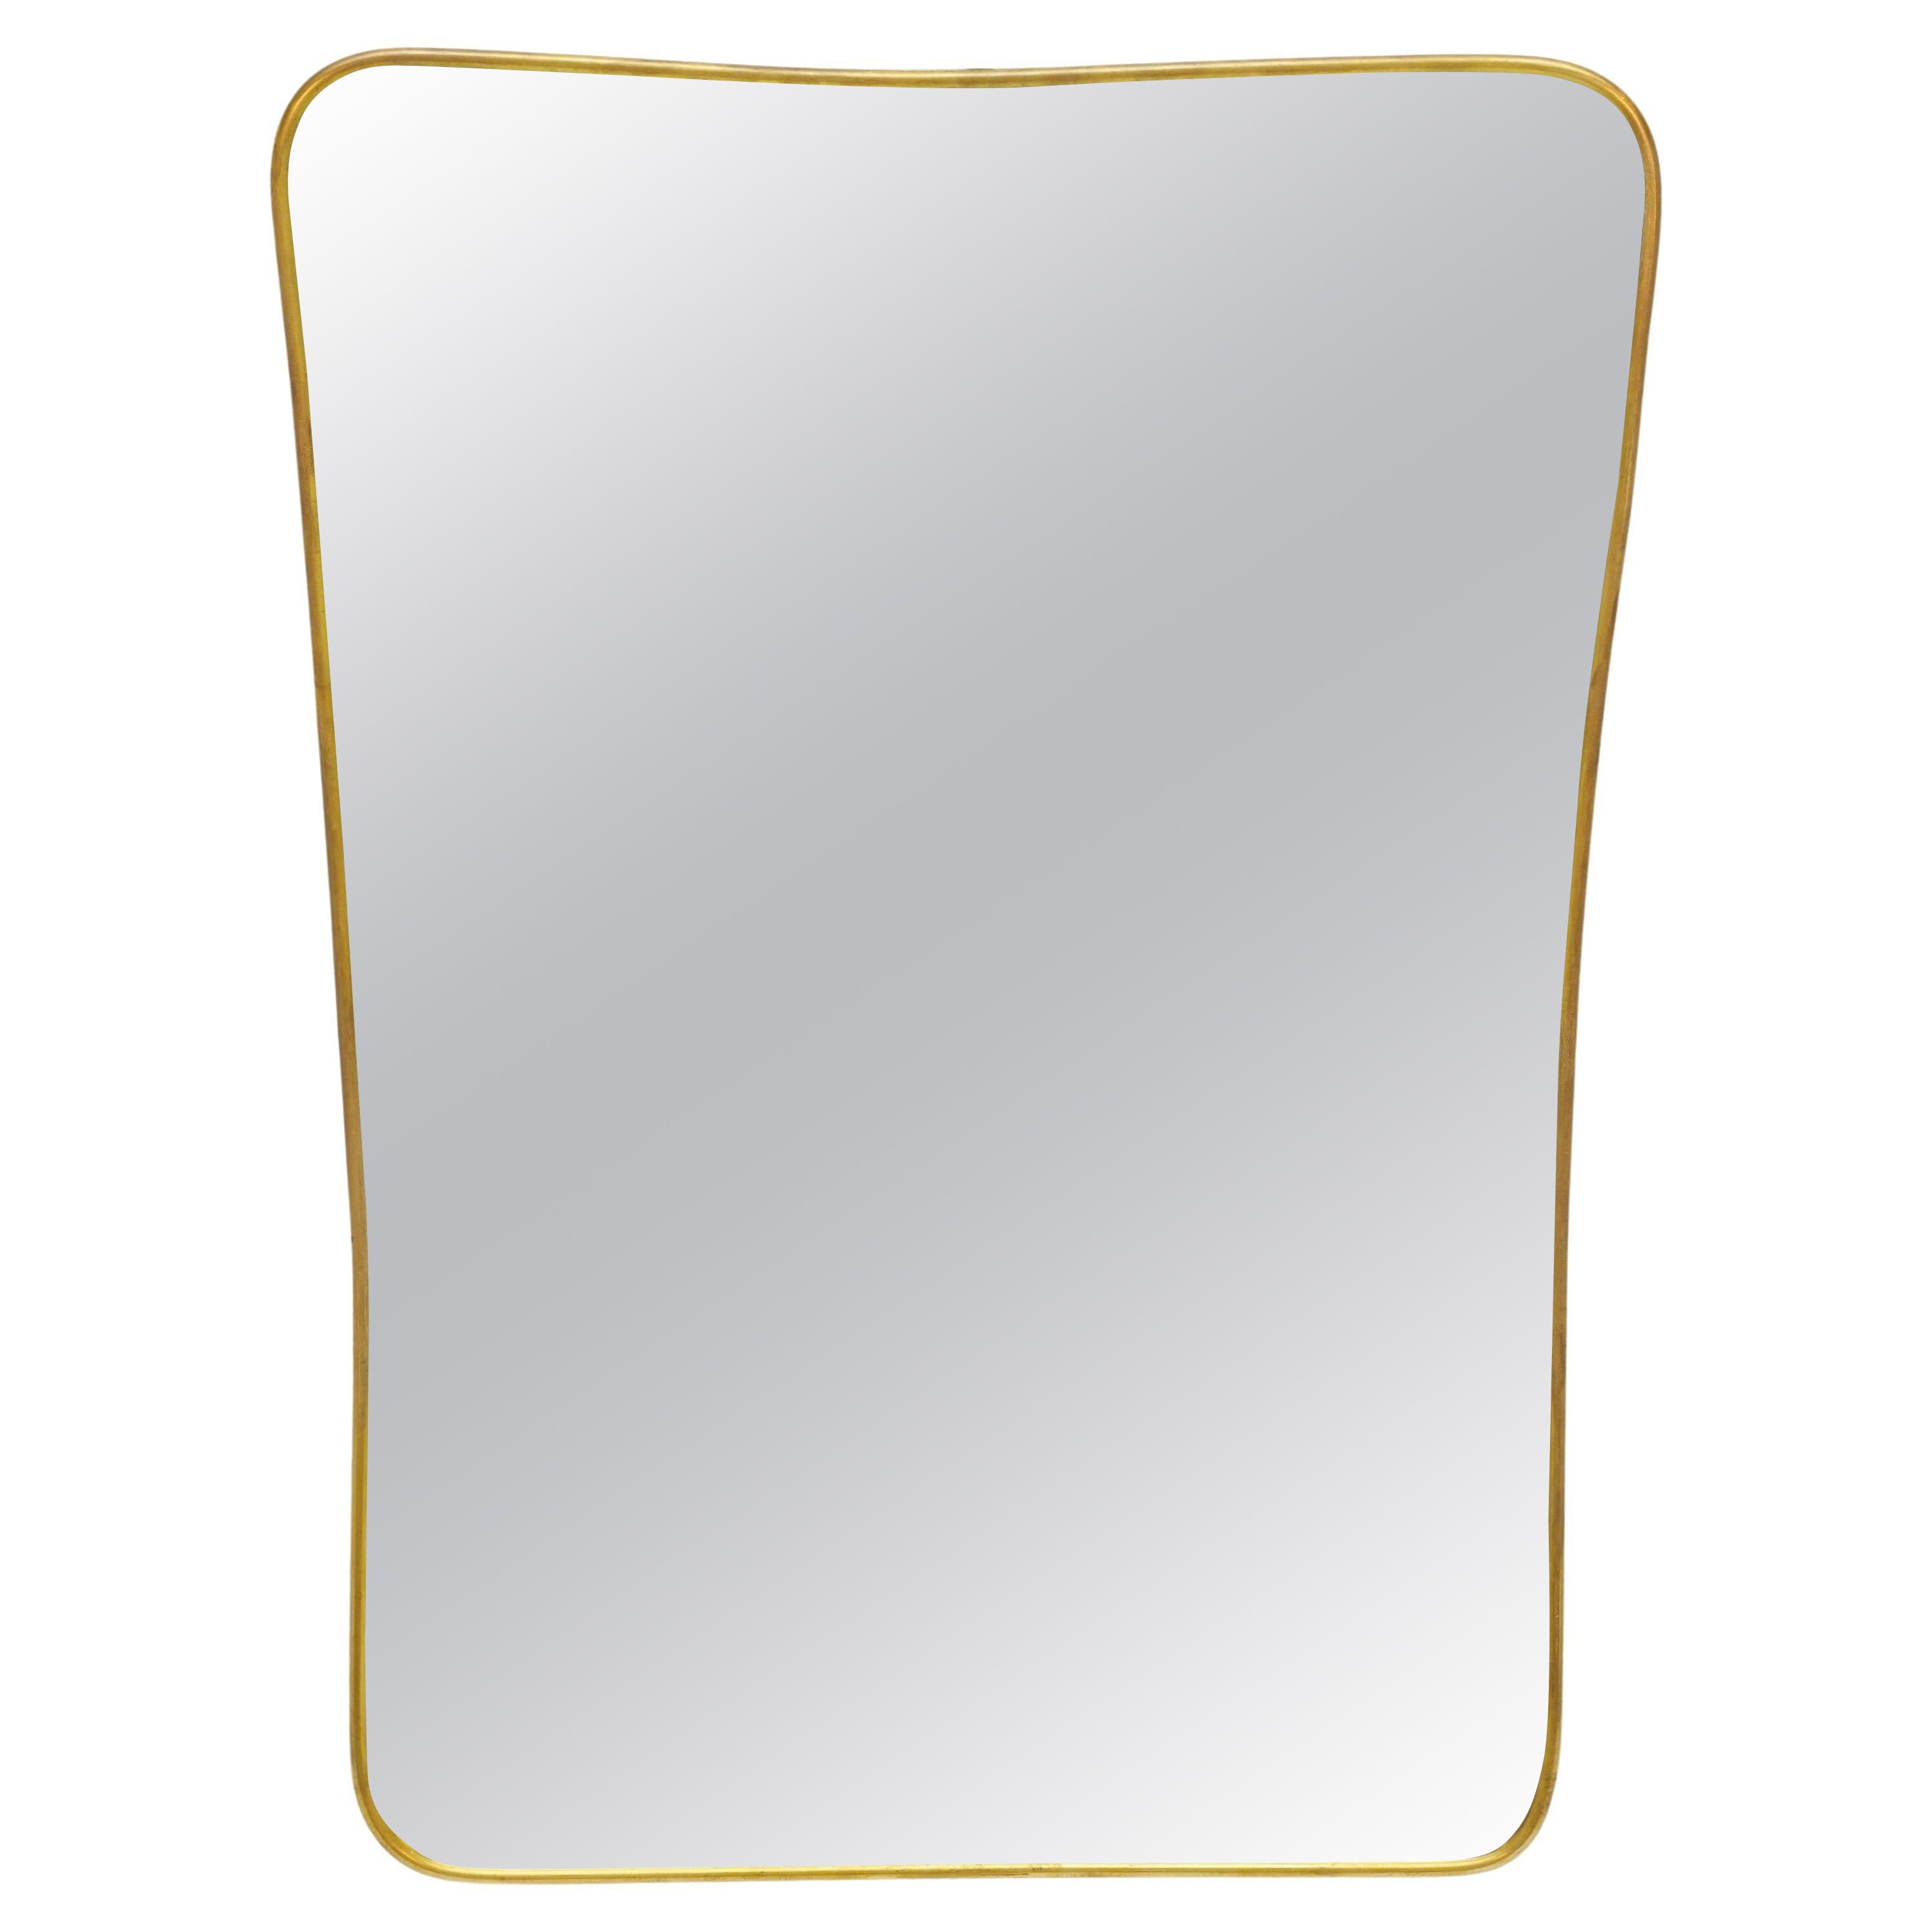 Italian Modern Gio Ponti Style Wall Mirror in Brass Frame (H 27 1/4 x W 19 3/4) For Sale